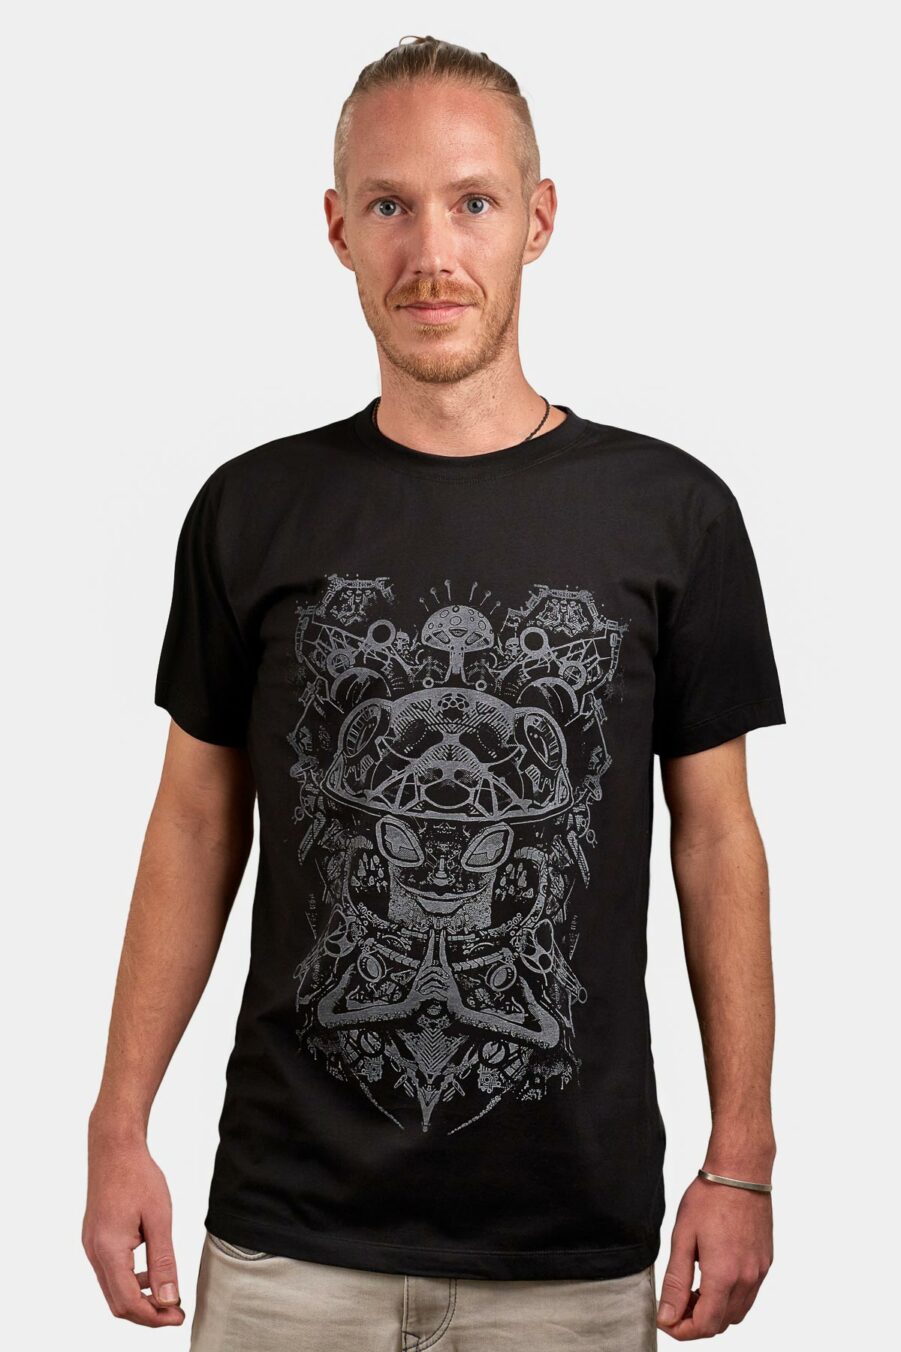 avanyah-clothing-mycelium-t-shirt-black-for-men-psychedelic-print-artwork